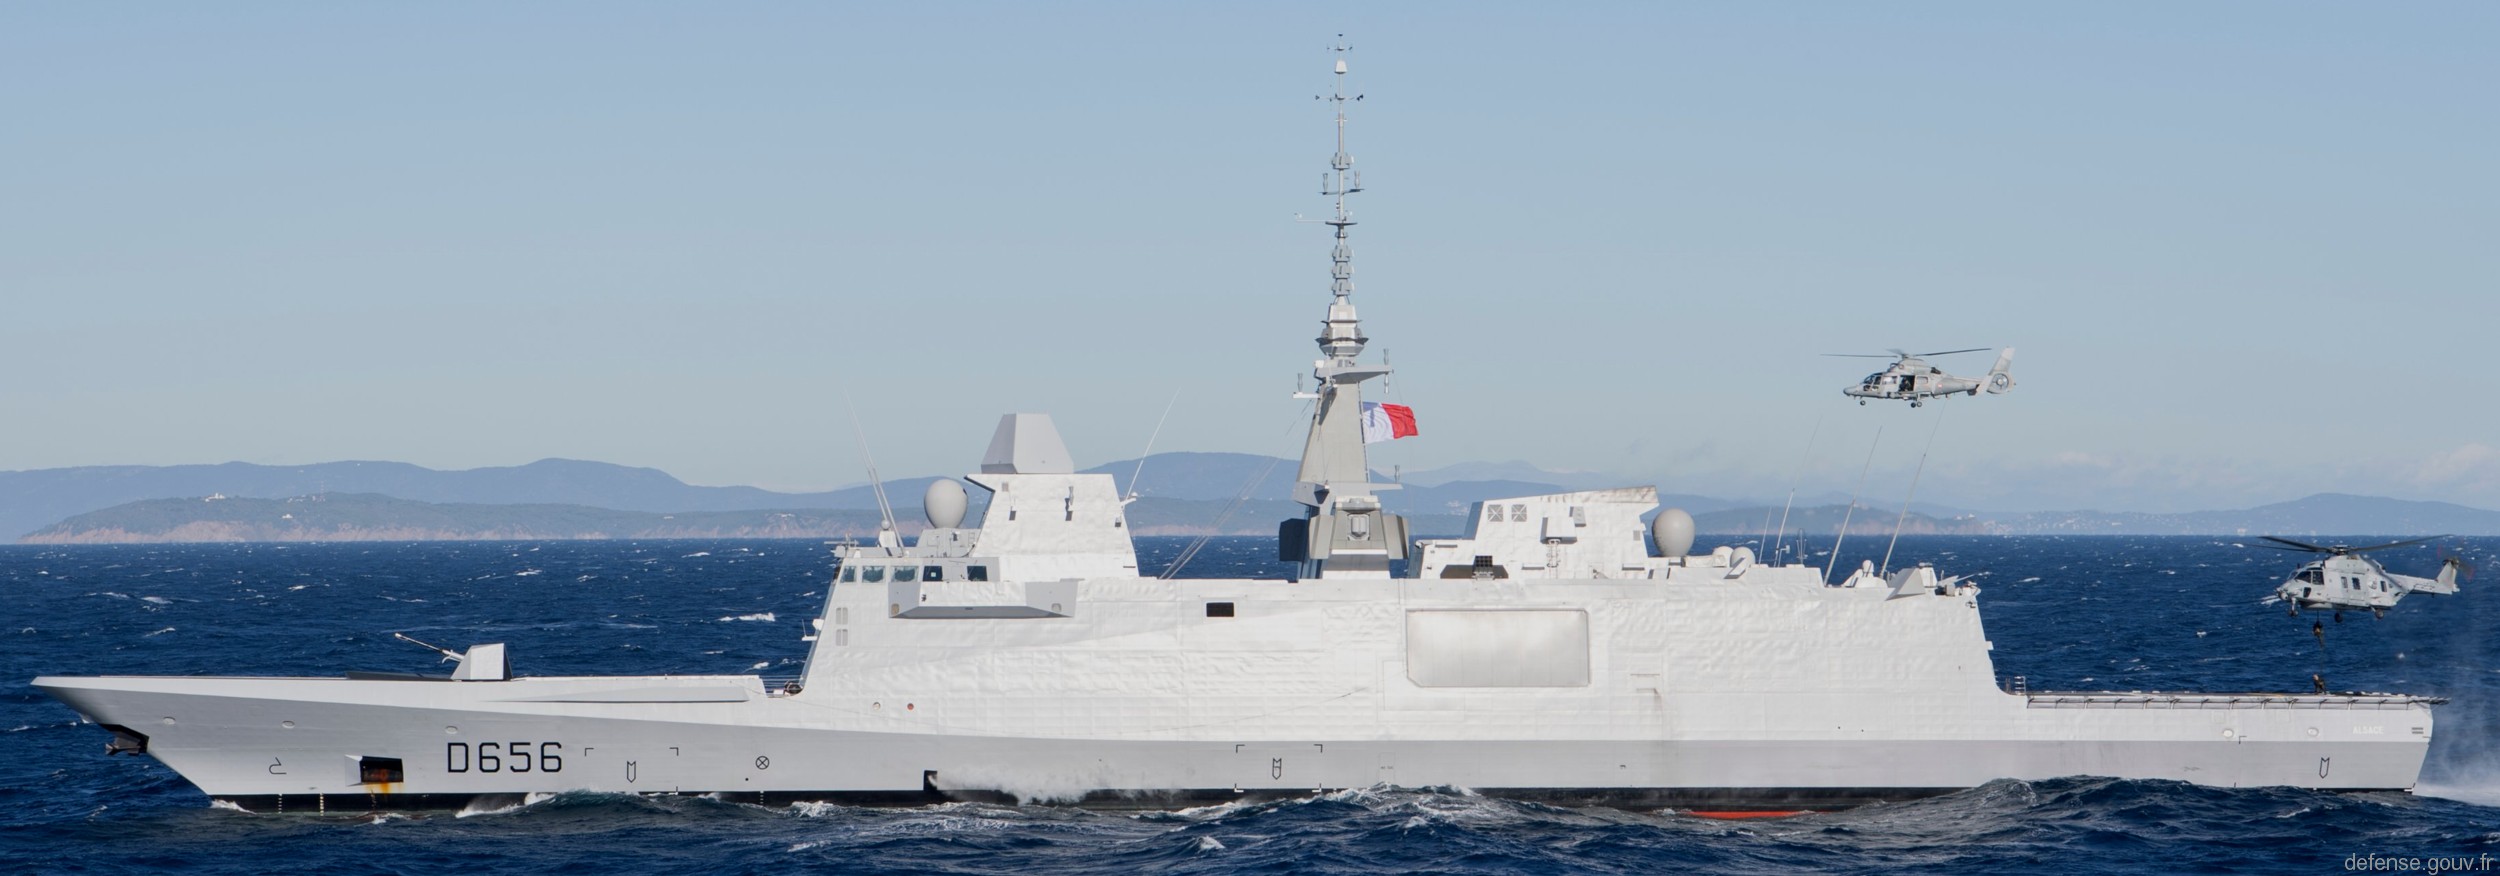 d-656 fs alsace fremm aquitaine class frigate fregate multi purpose french navy marine nationale 10